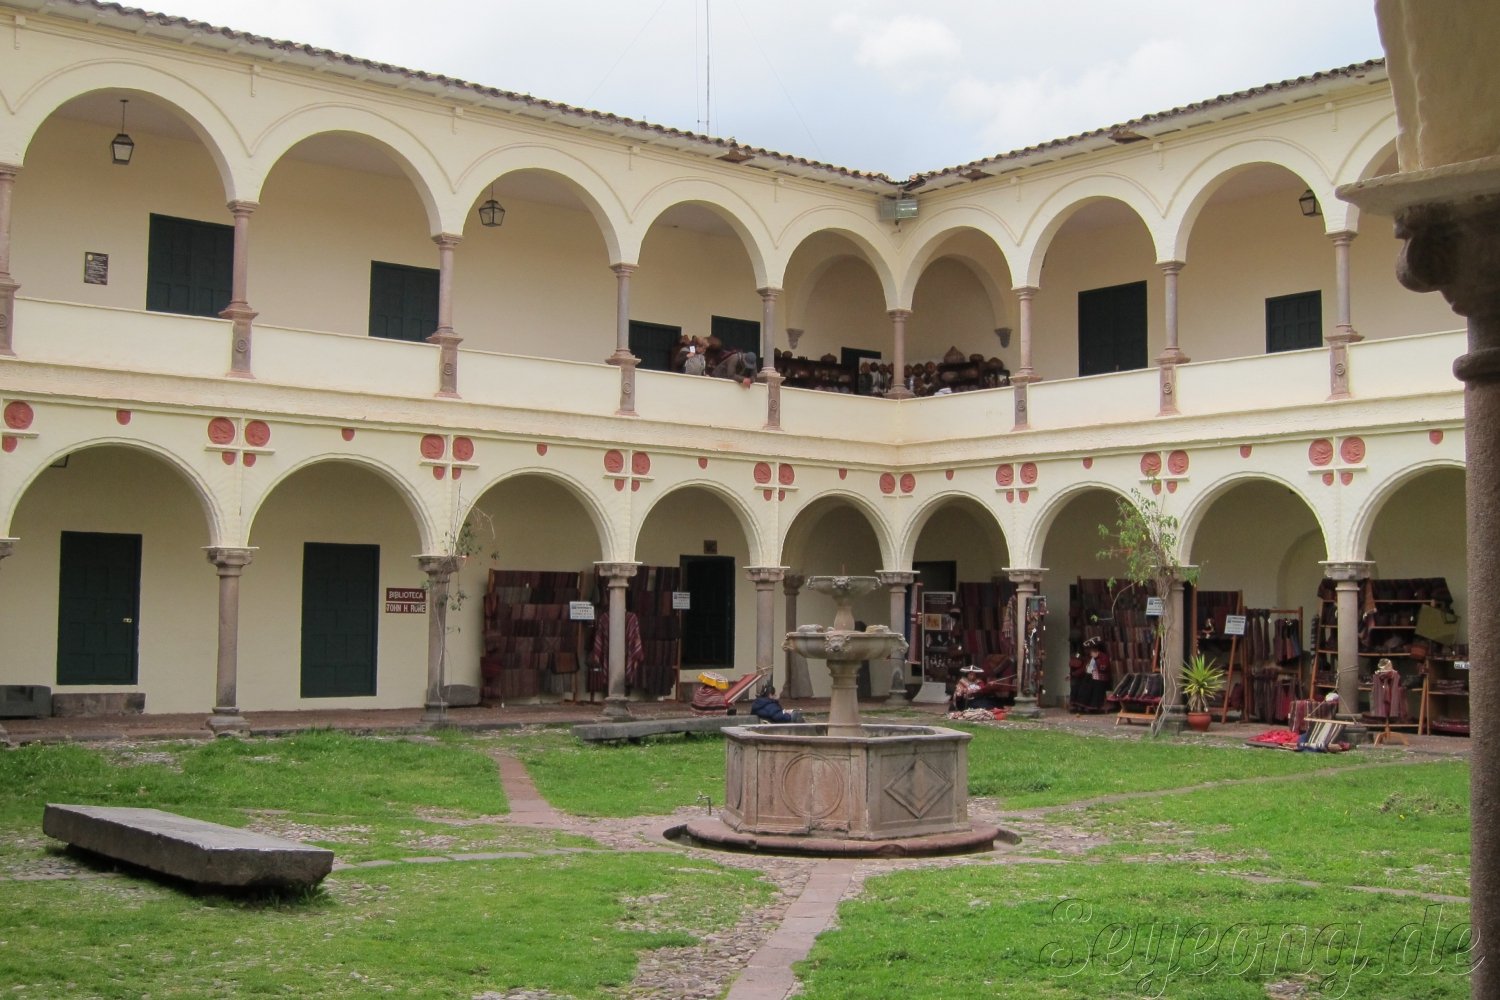 Museo Inka